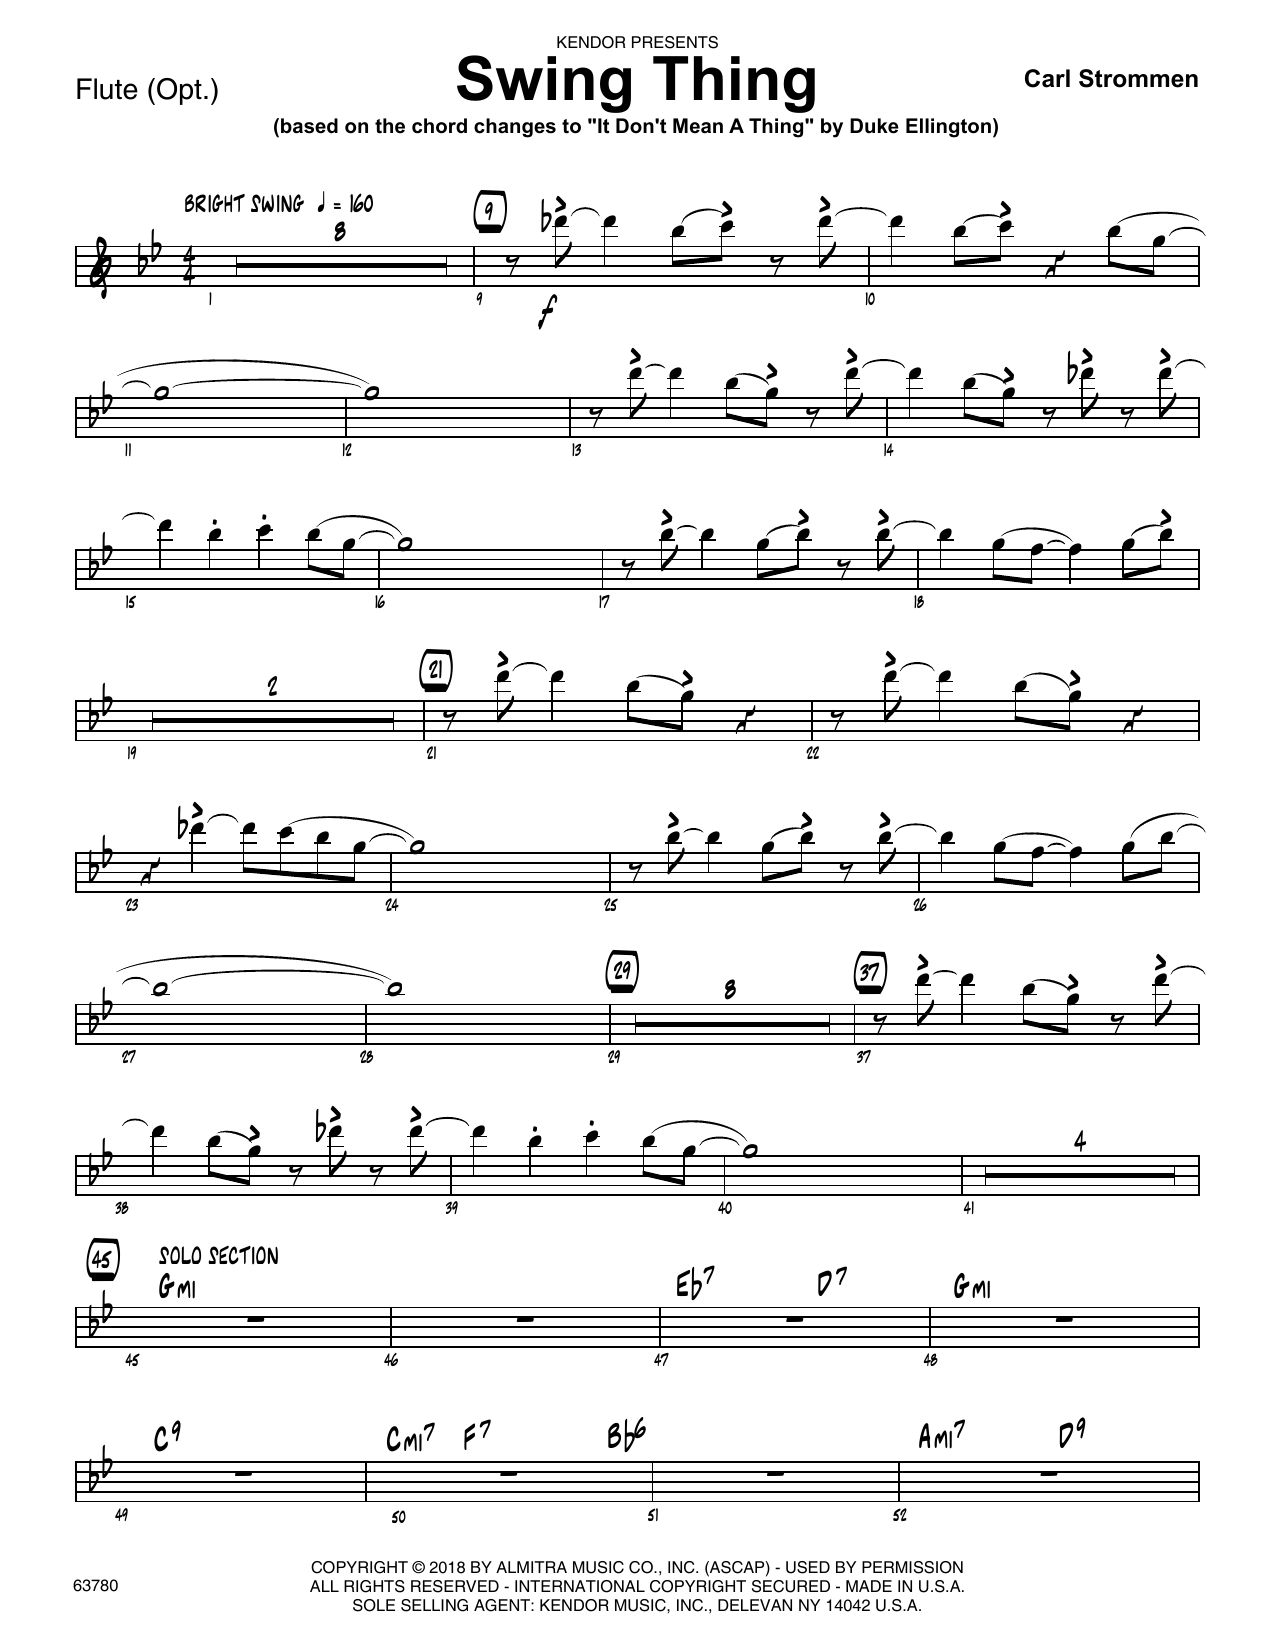 Download Carl Strommen Swing Thing - Flute Sheet Music